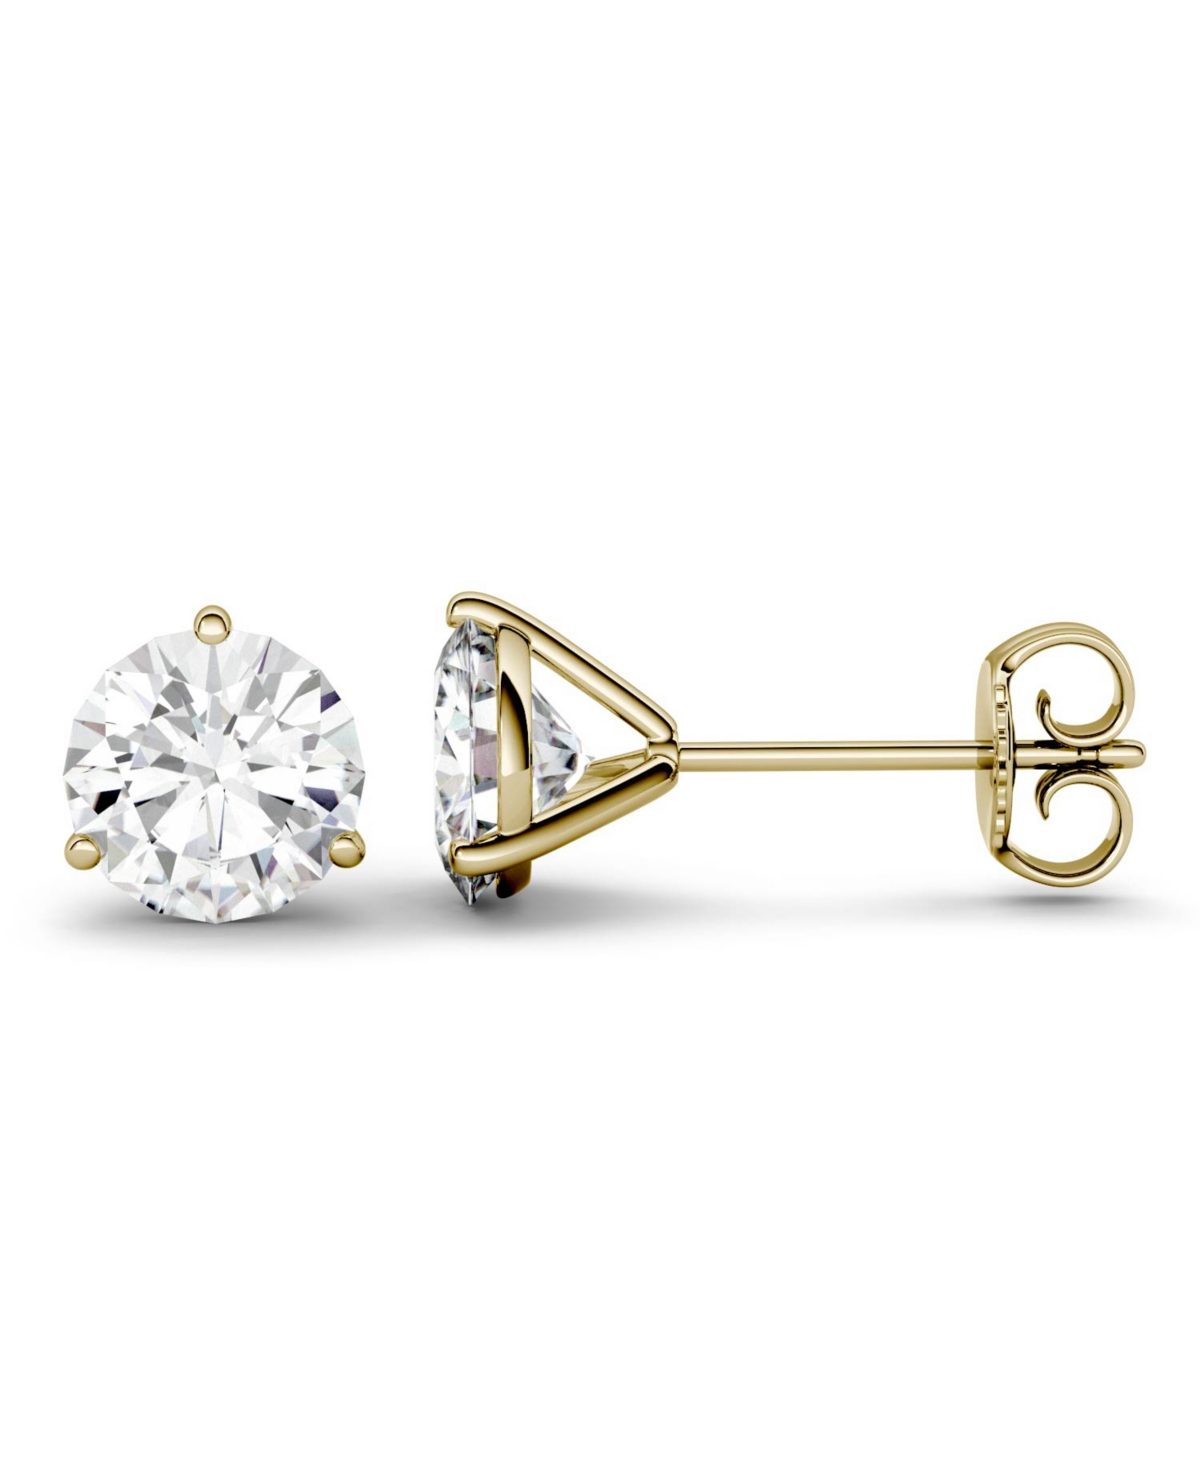 Charles & Colvard Moissanite Martini Stud Earrings (2 ct. t.w. Diamond Equivalent) in 14k White or Yellow Gold